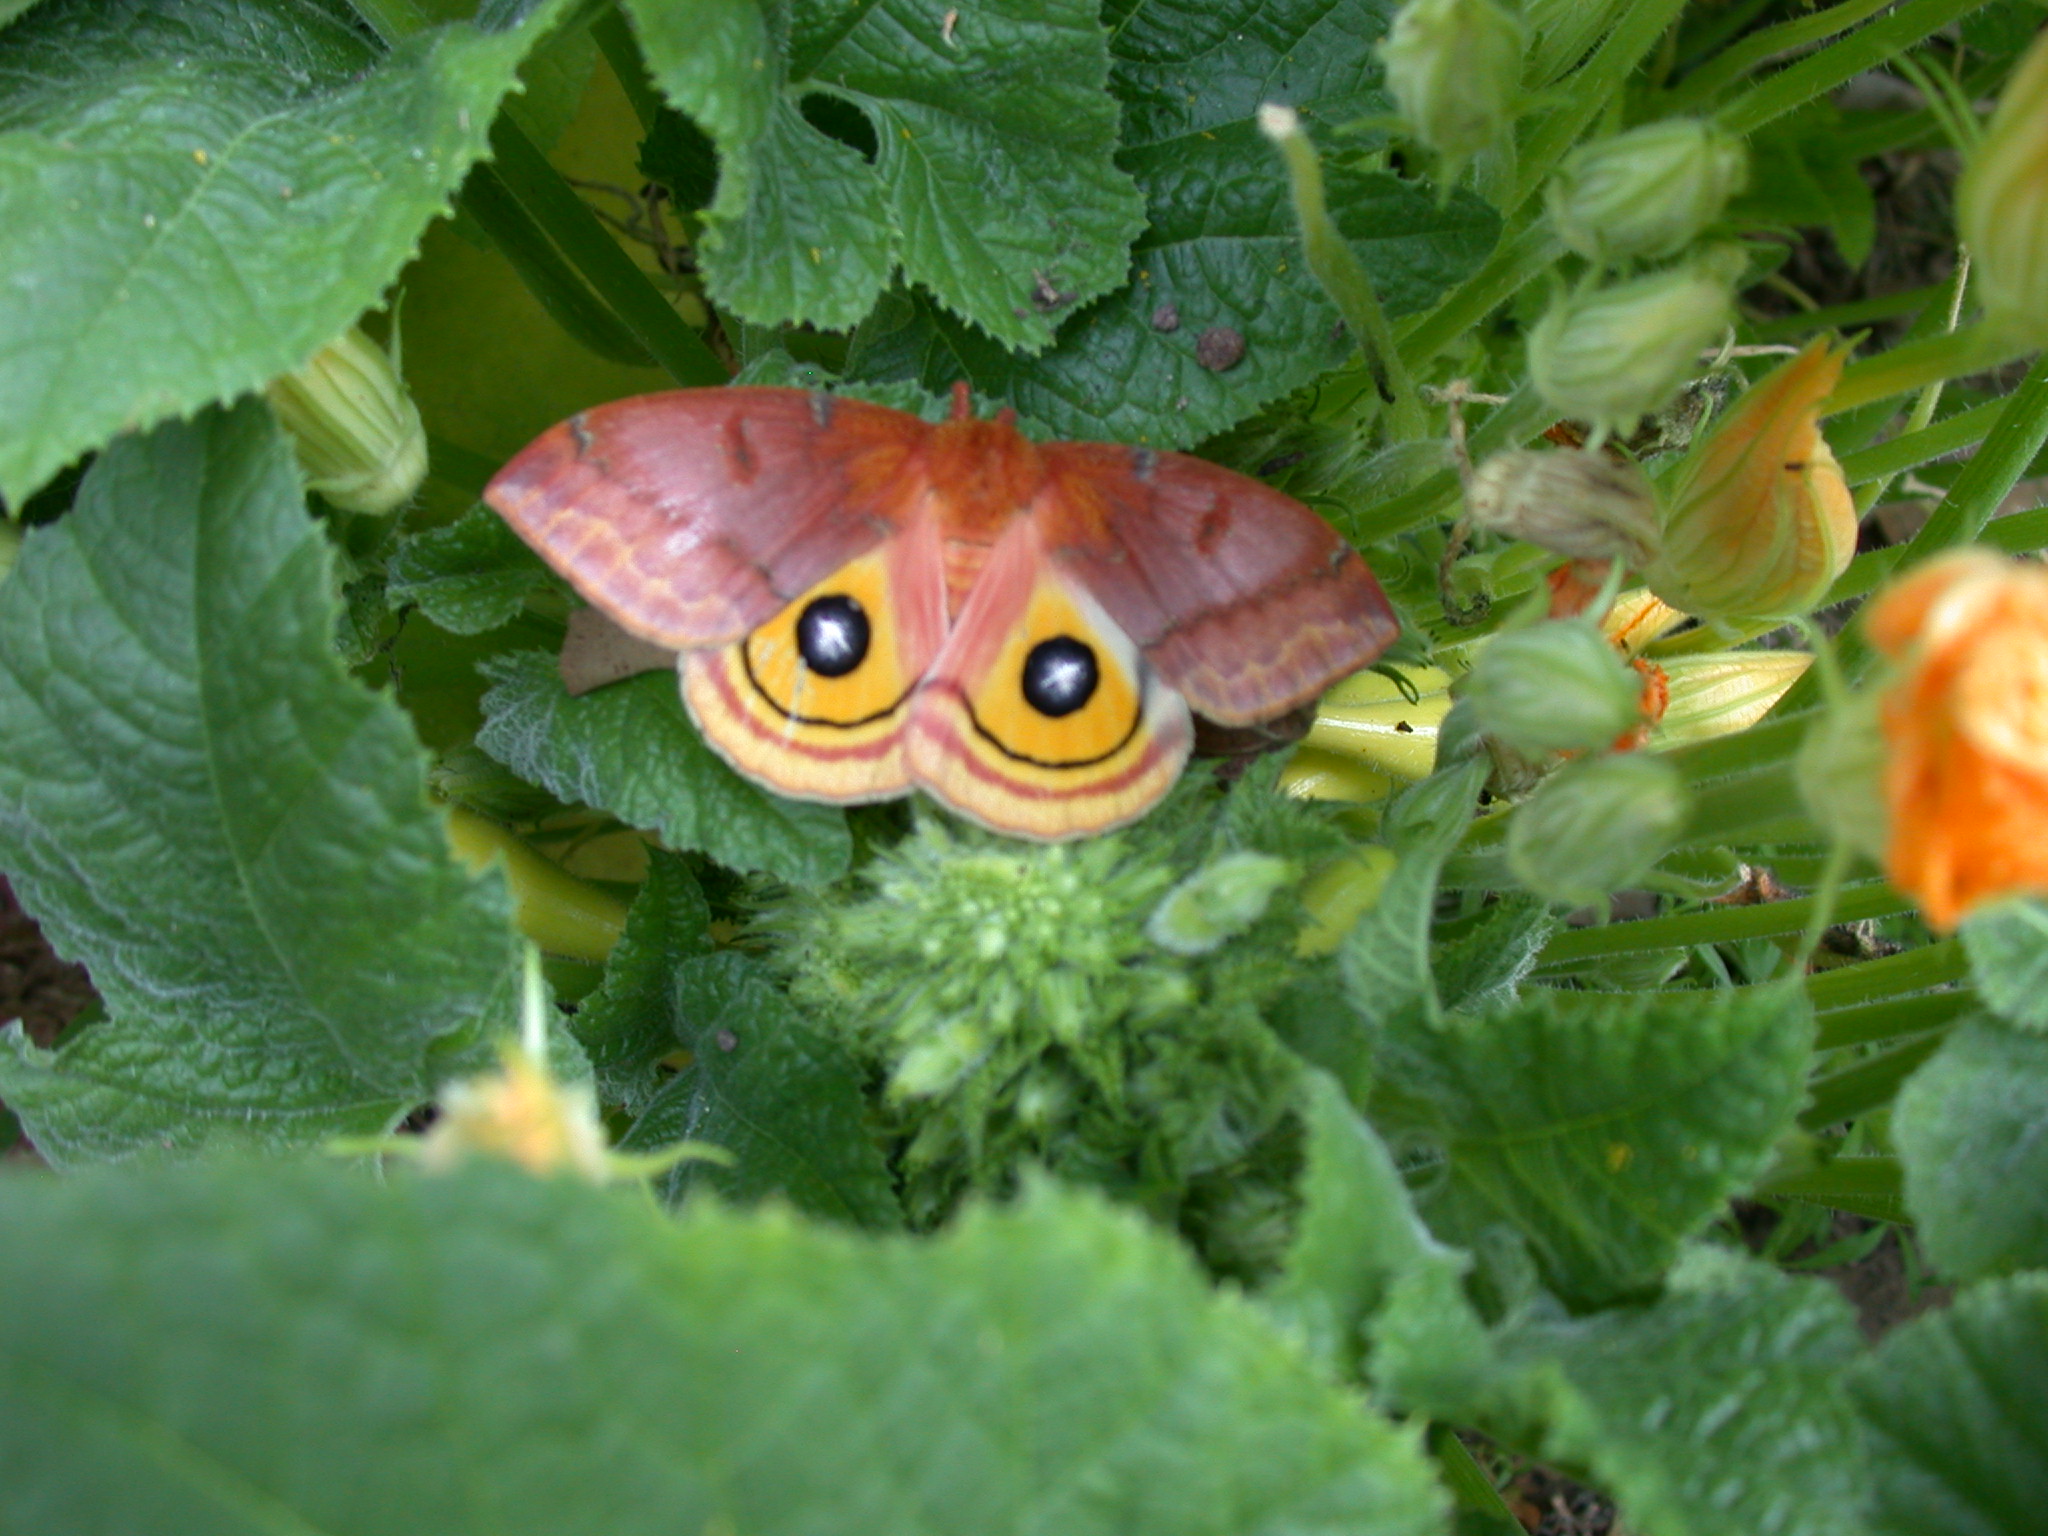 io moth on squash blossoms in my garden